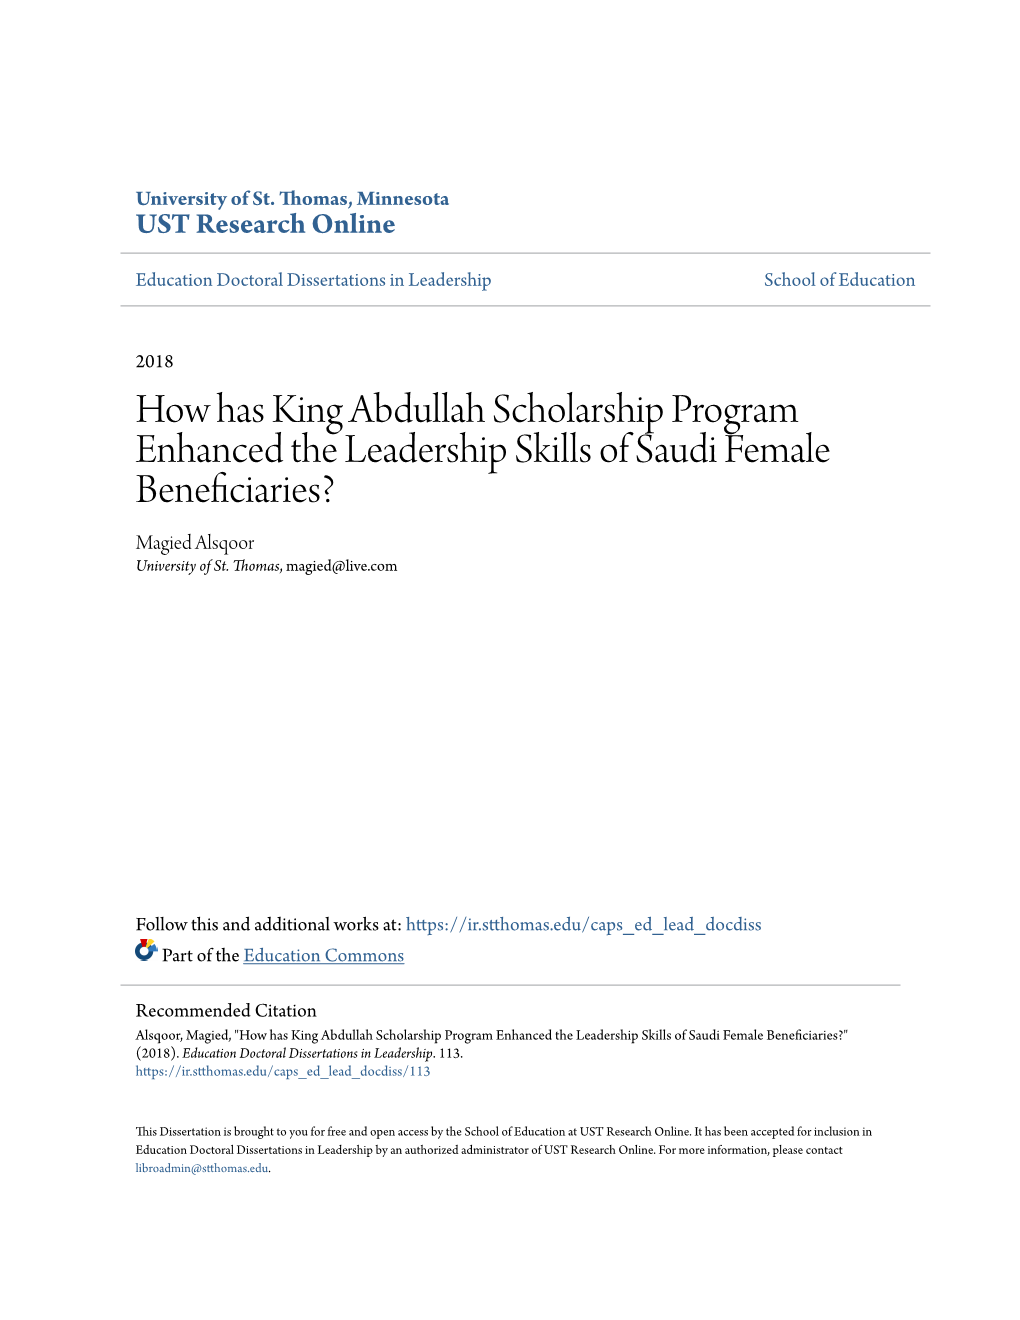 How Has King Abdullah Scholarship Program Enhanced the Leadership Skills of Saudi Female Beneficiaries? Magied Alsqoor University of St